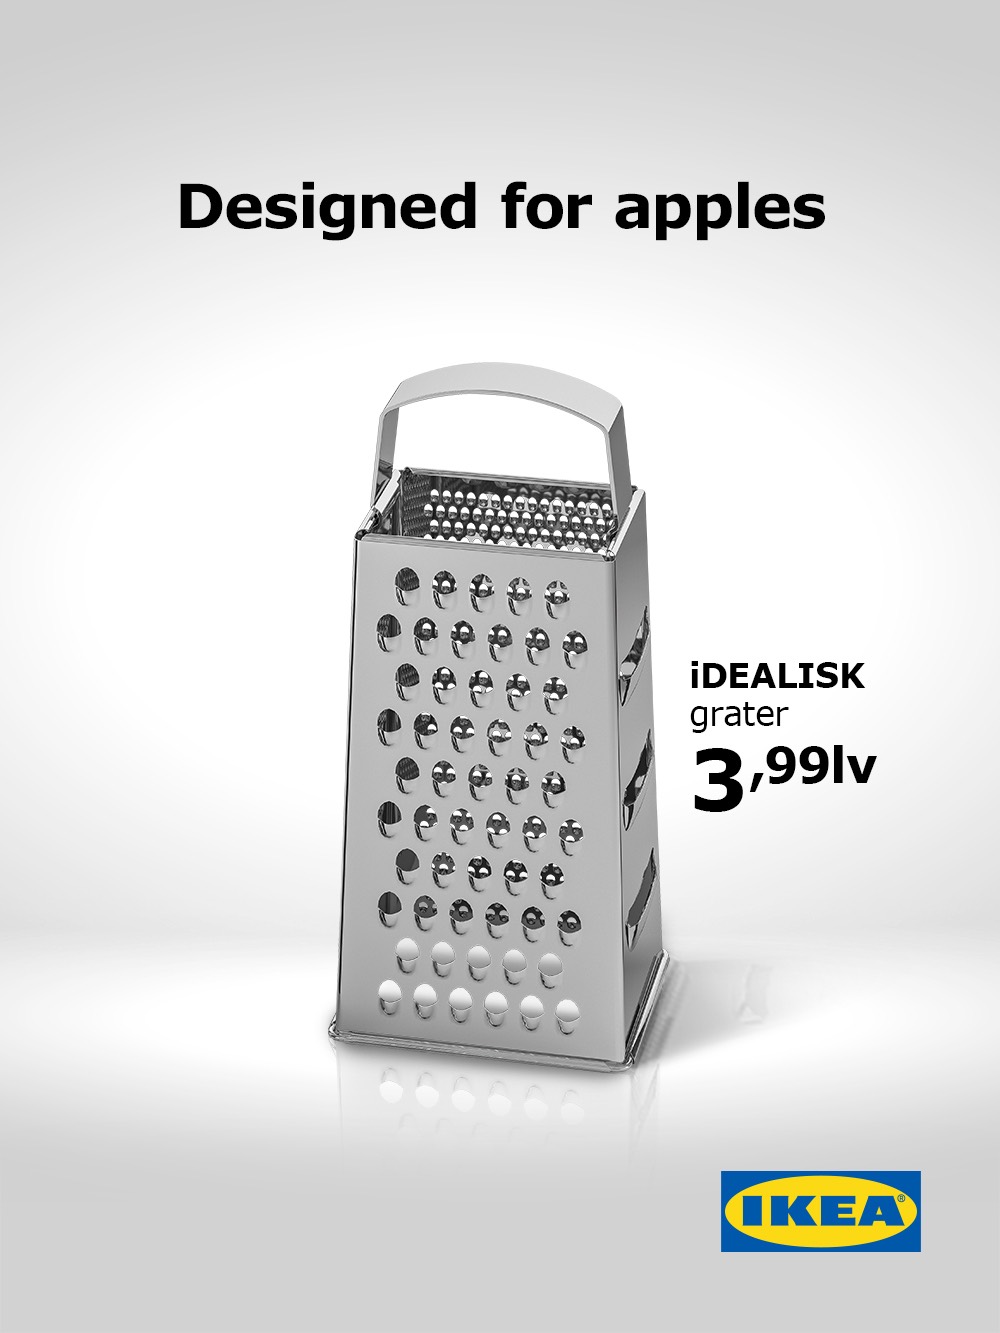 IKEA Designed for Apples - Apple Mac Pro